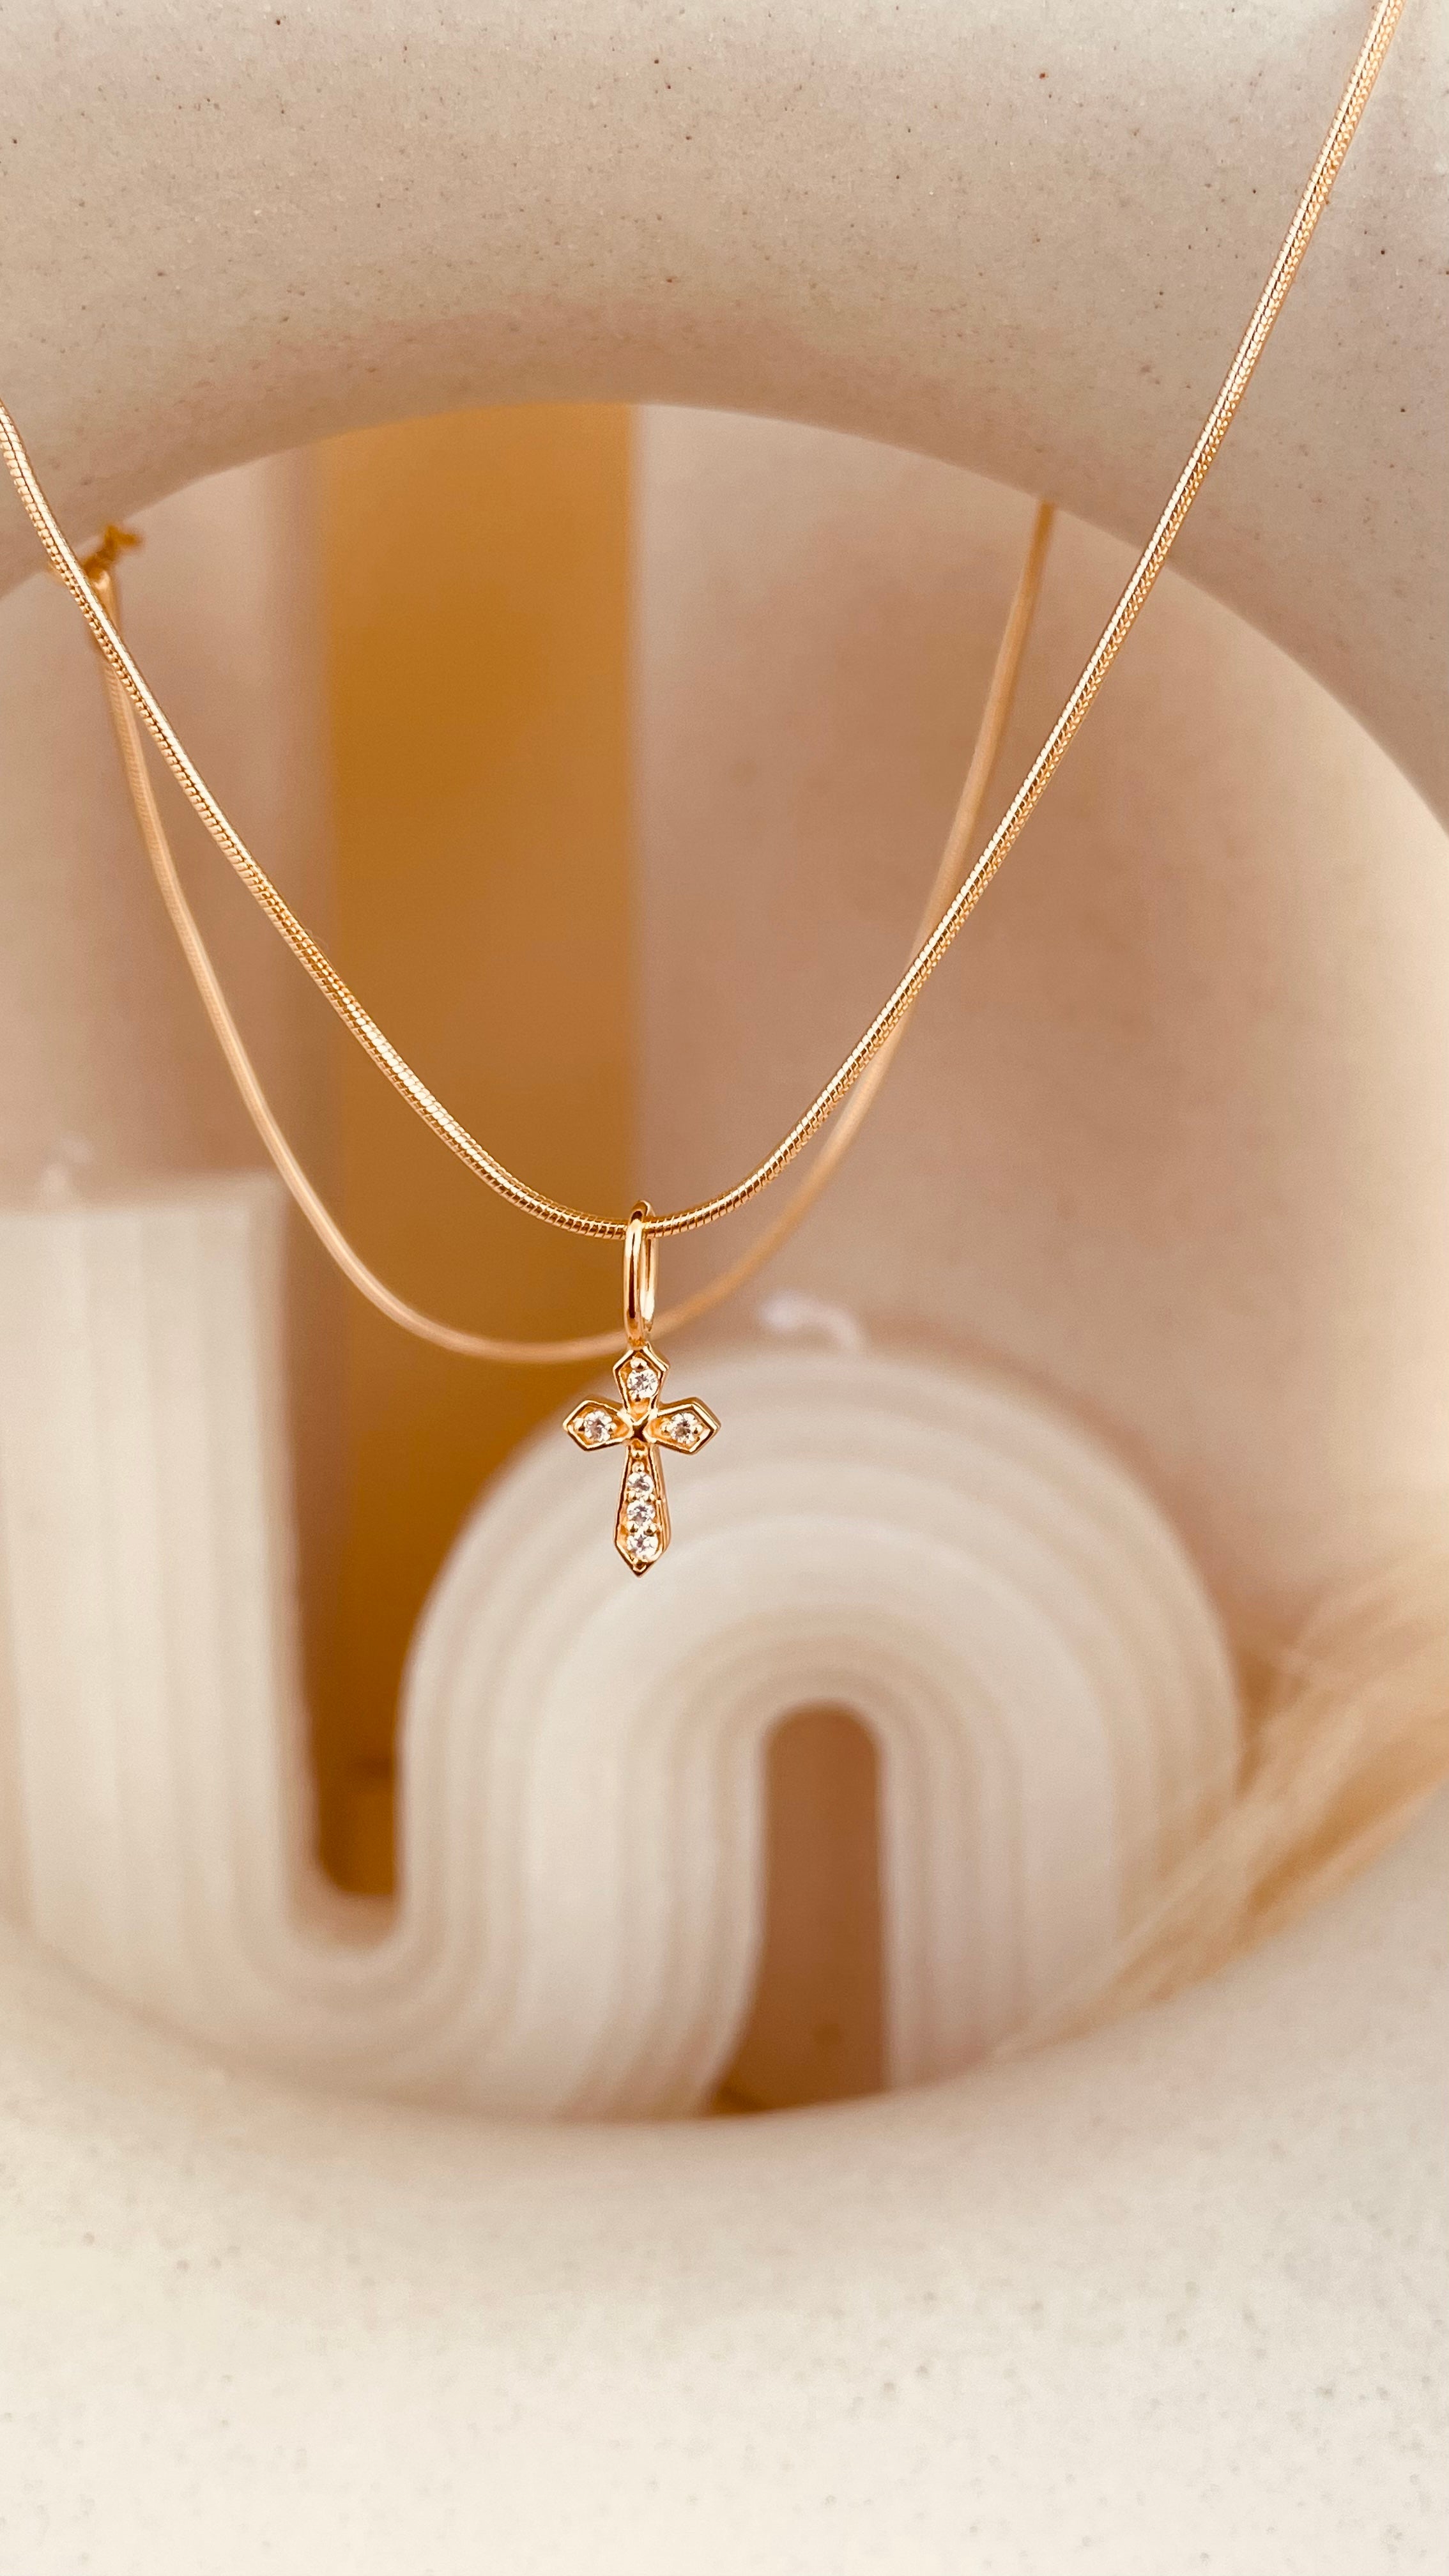 Minimal Token of Faith Necklace with Snake Chain - Octonov 